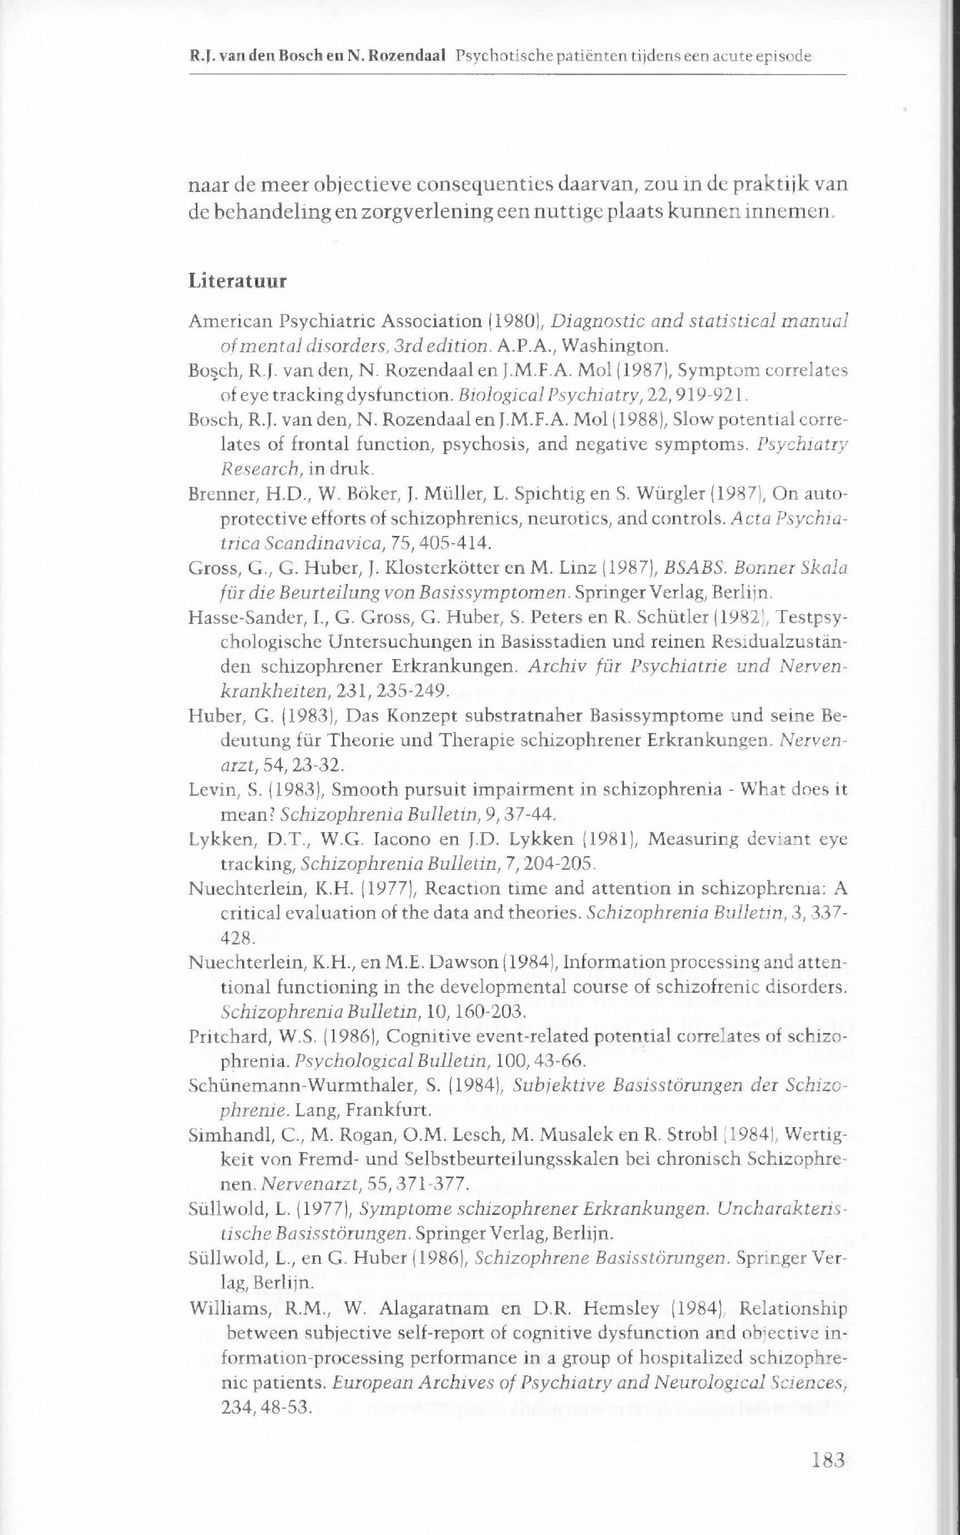 Literatuur American Psychiatric Association (1980,/ Diagnostic and statistical manual of mental disorders, 3rd edition. A.P.A., Washington. Bosch, R.J. van den, N. Rozendaal en J.M.F.A. Mol (1987), Symptom correlates of eye tracking dysfunction.